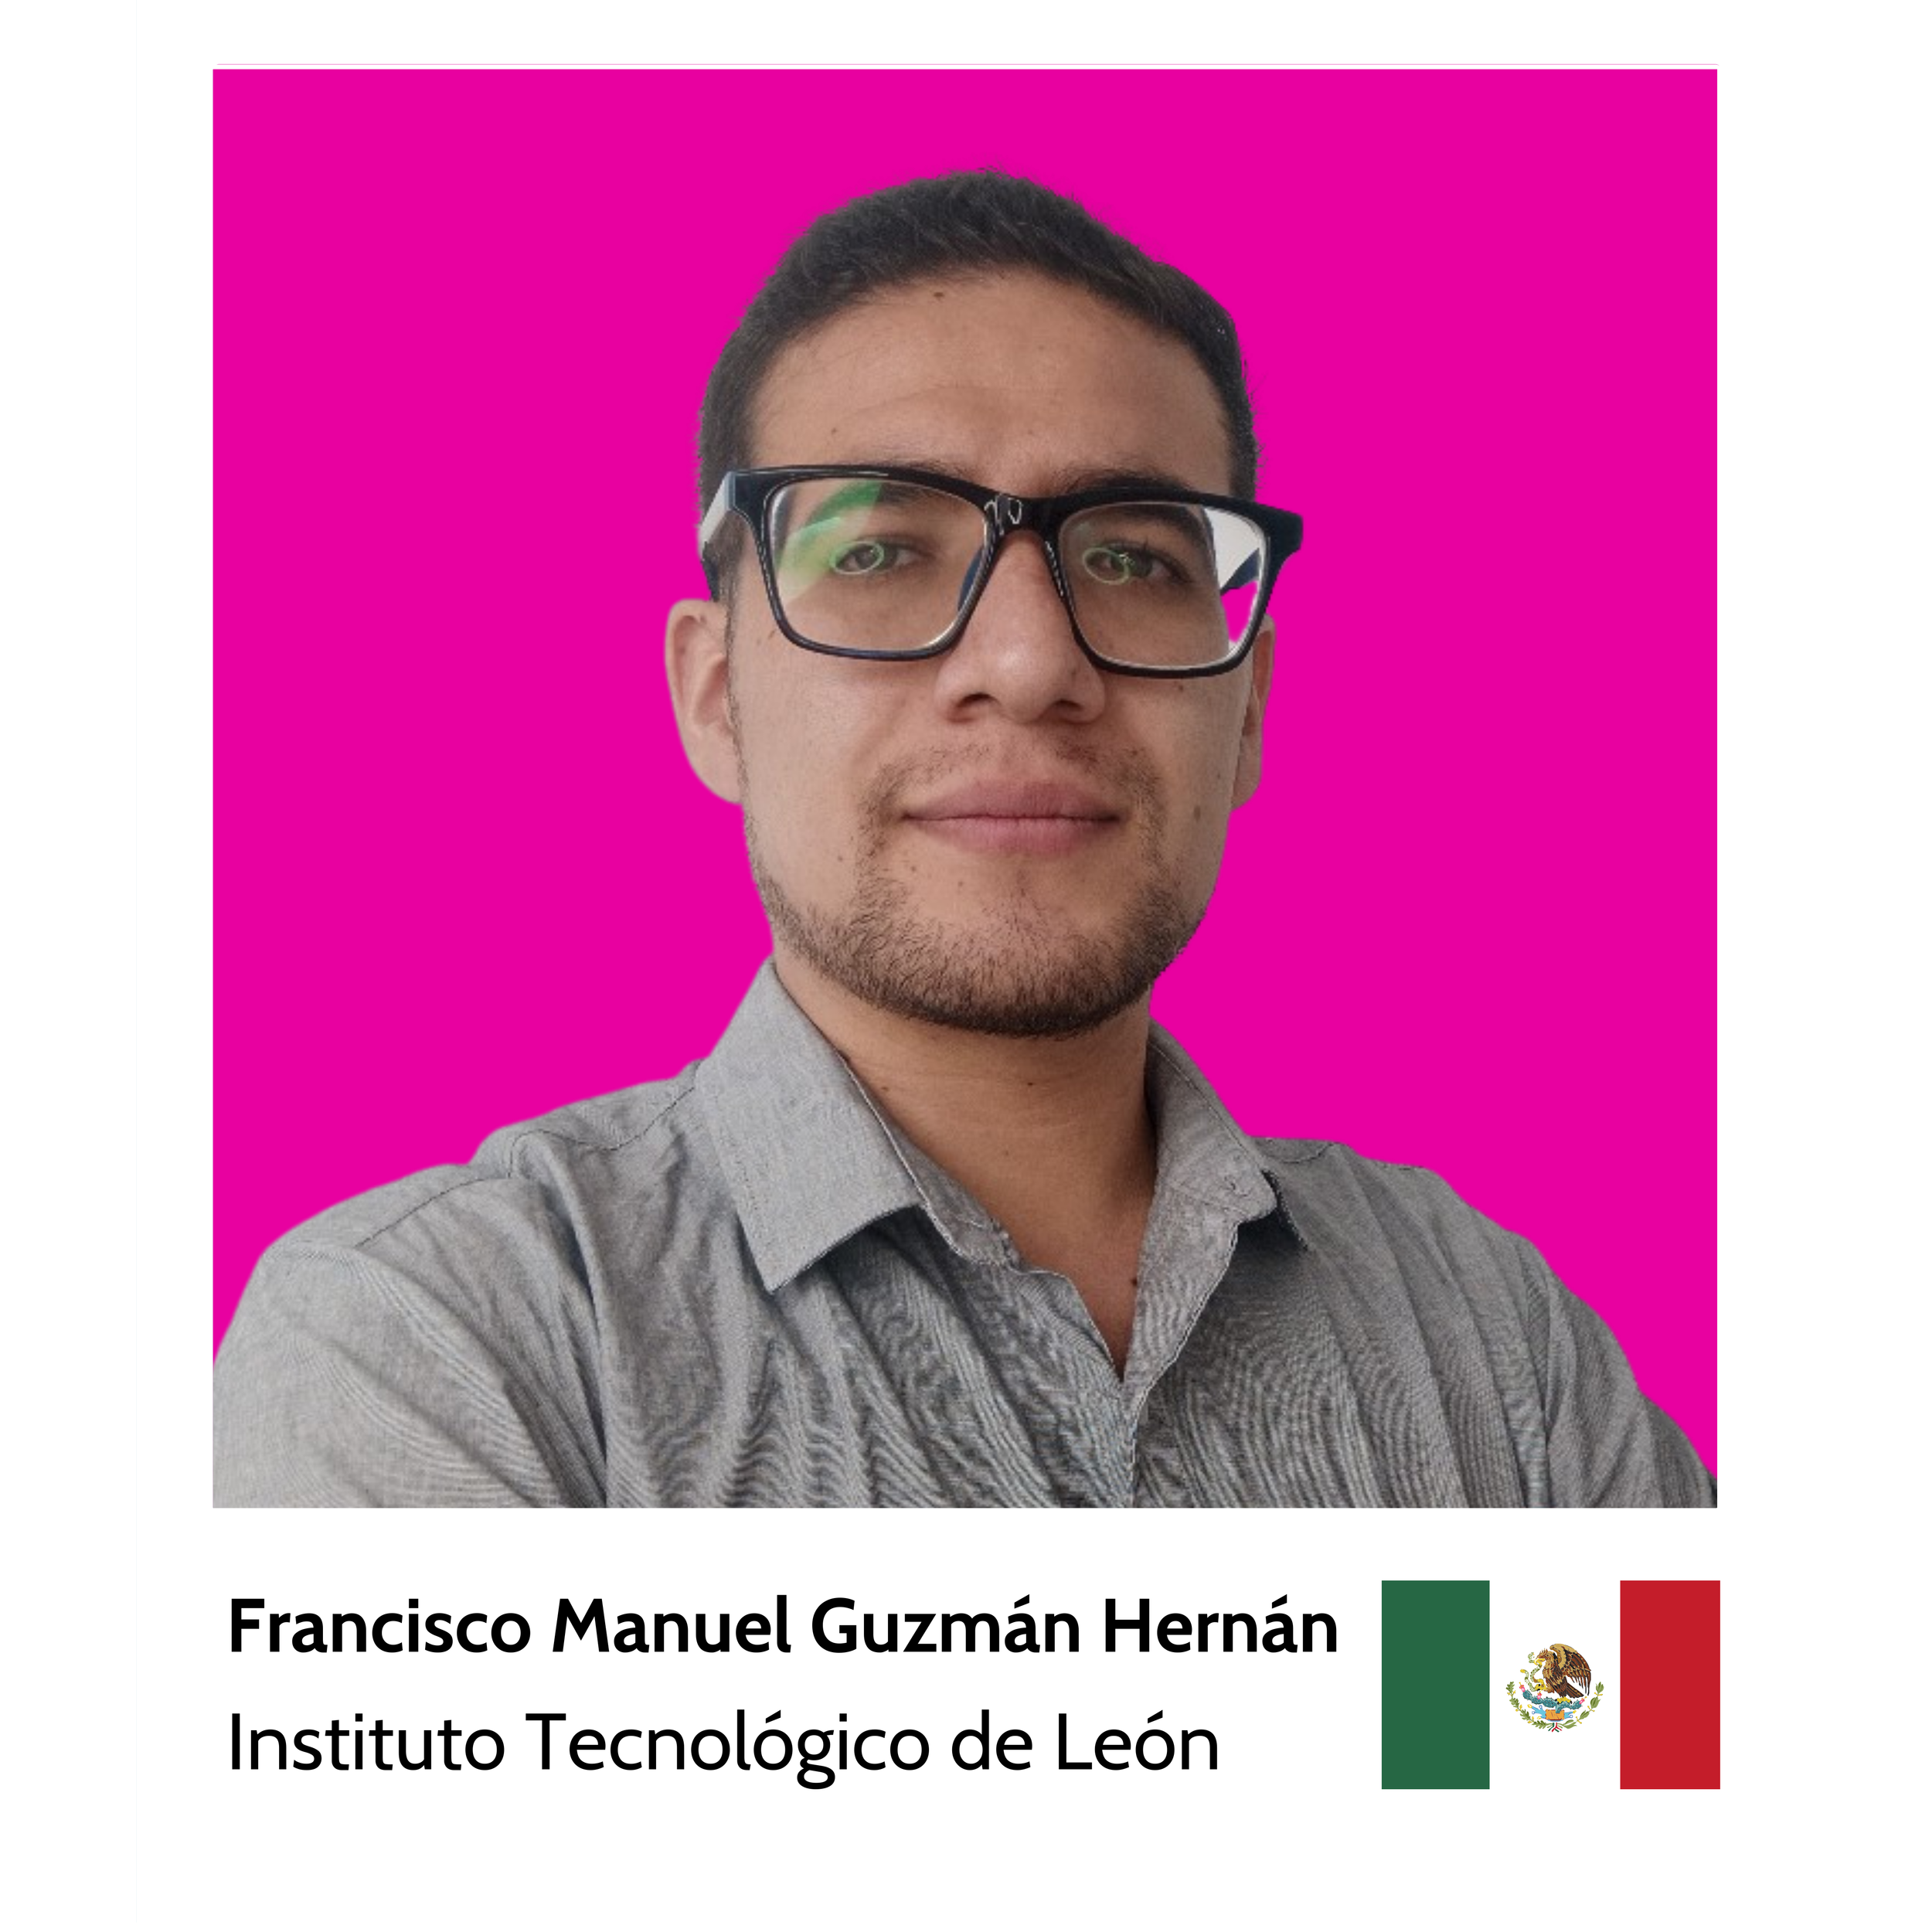 Your_Big_Year_ibm_zsystems_ambassador_ Francisco_Manuel_Guzmán_Hernán_(Paco)_Instituto_Tecnológico_de_León.png